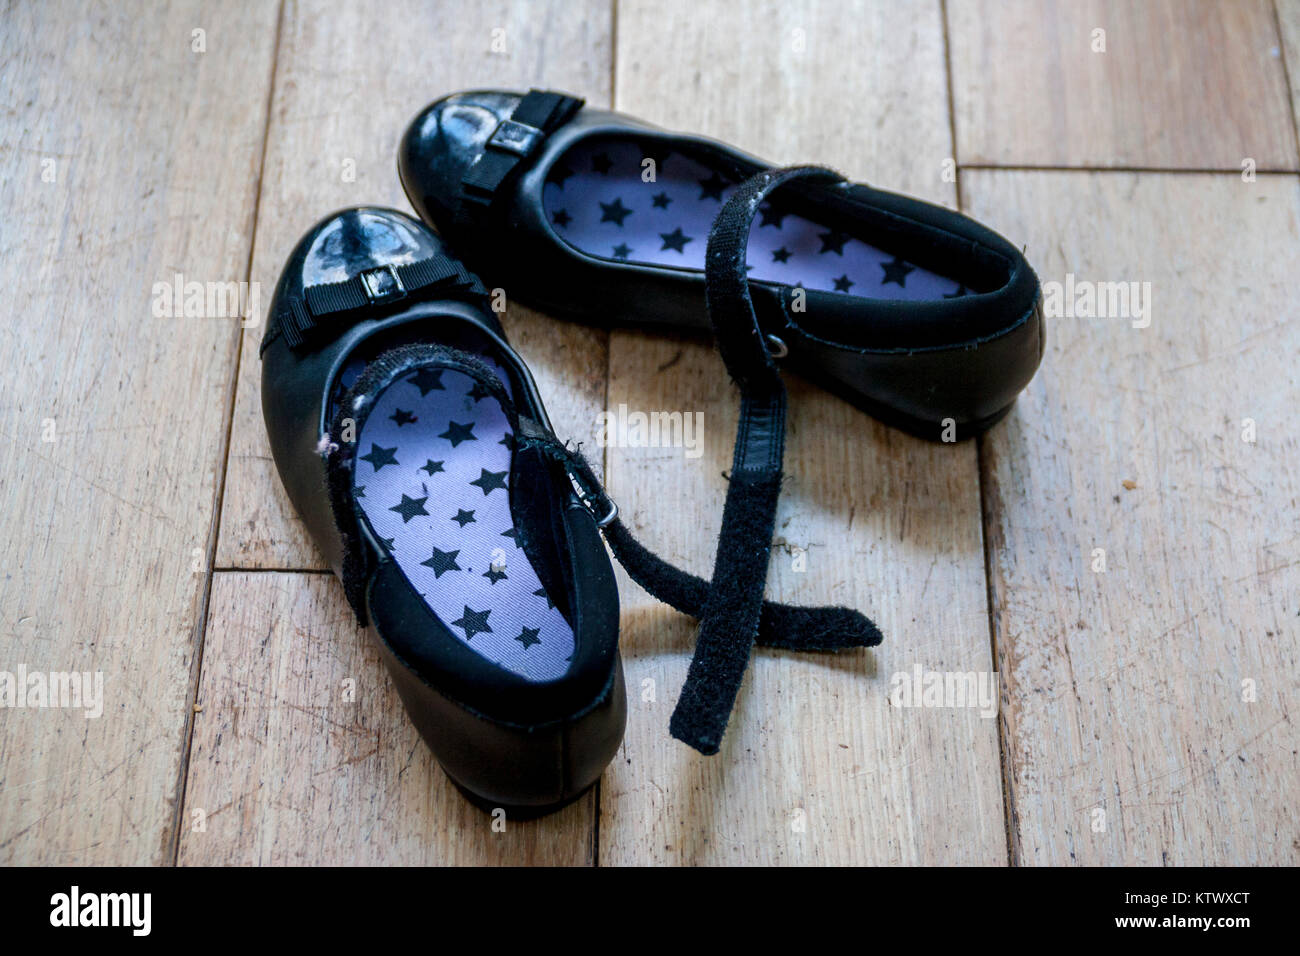 clarks childrens black patent shoes